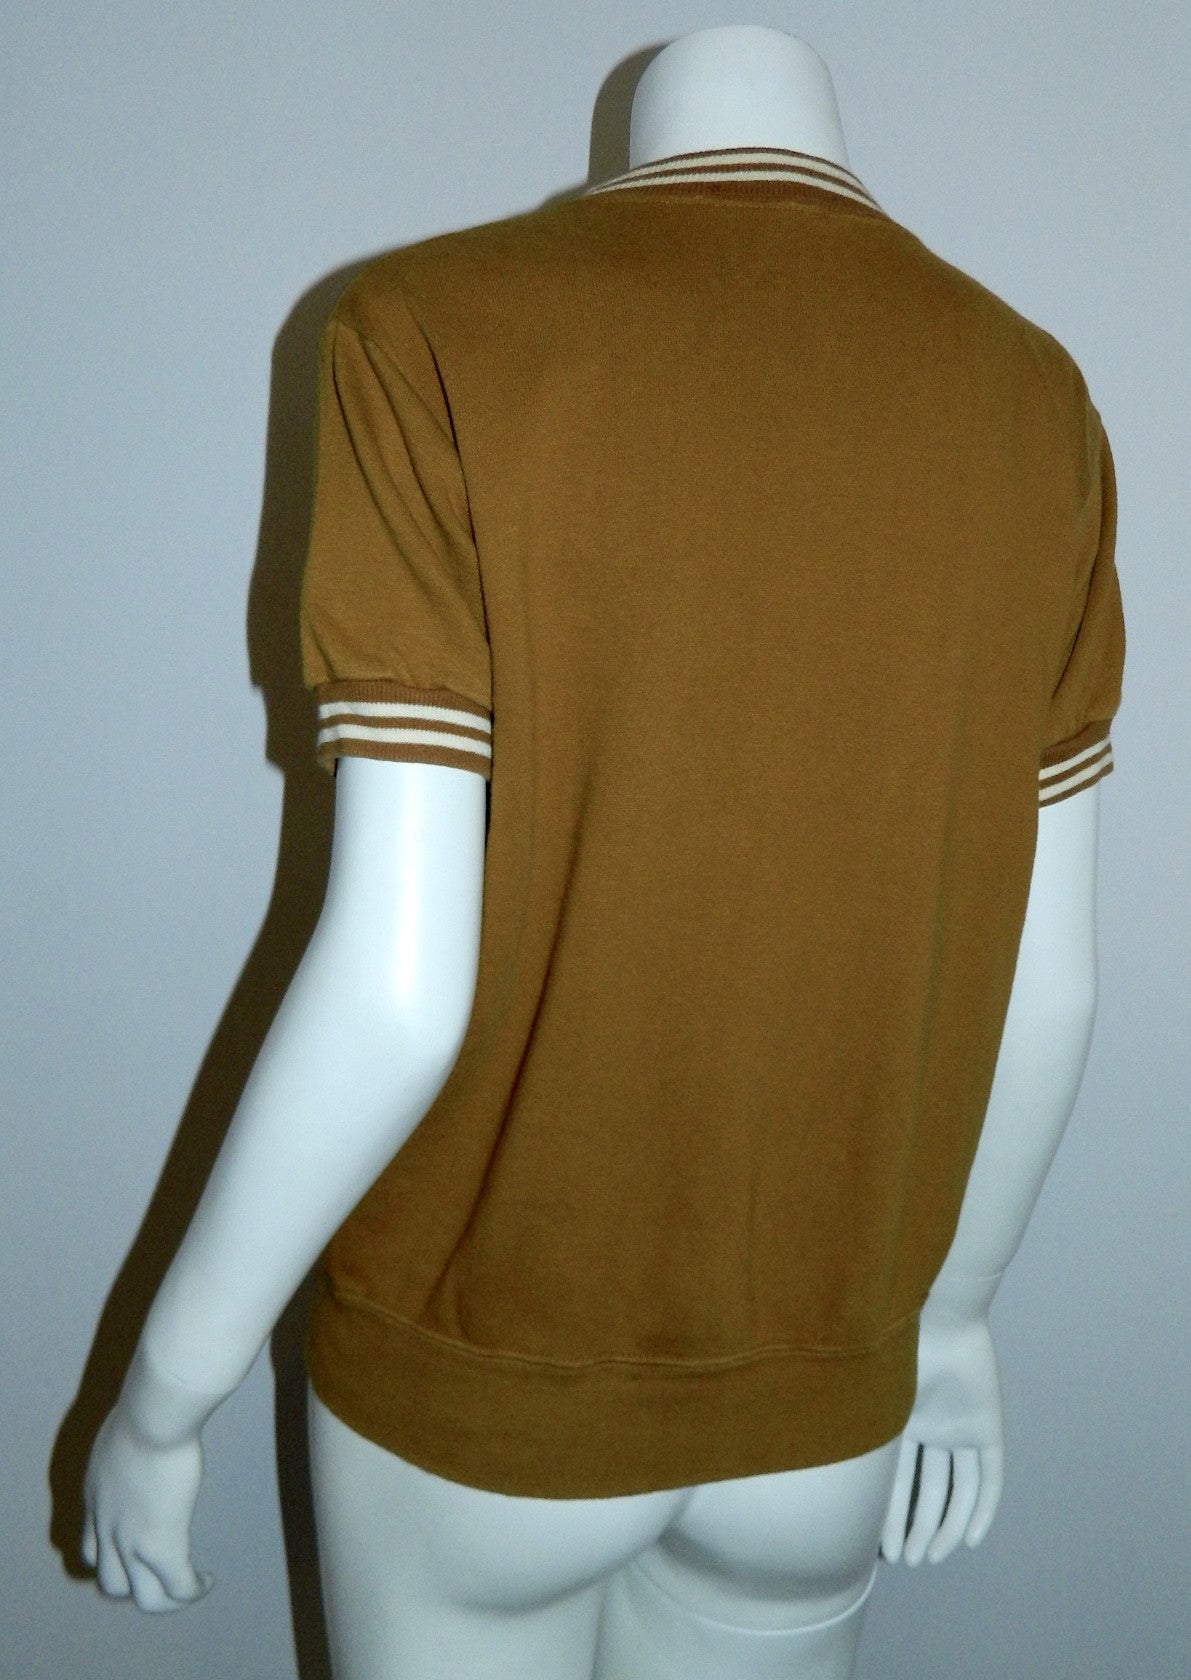 vintage 1960s sweatshirt University of Chicago tee shirt gold adult XS - S MCM